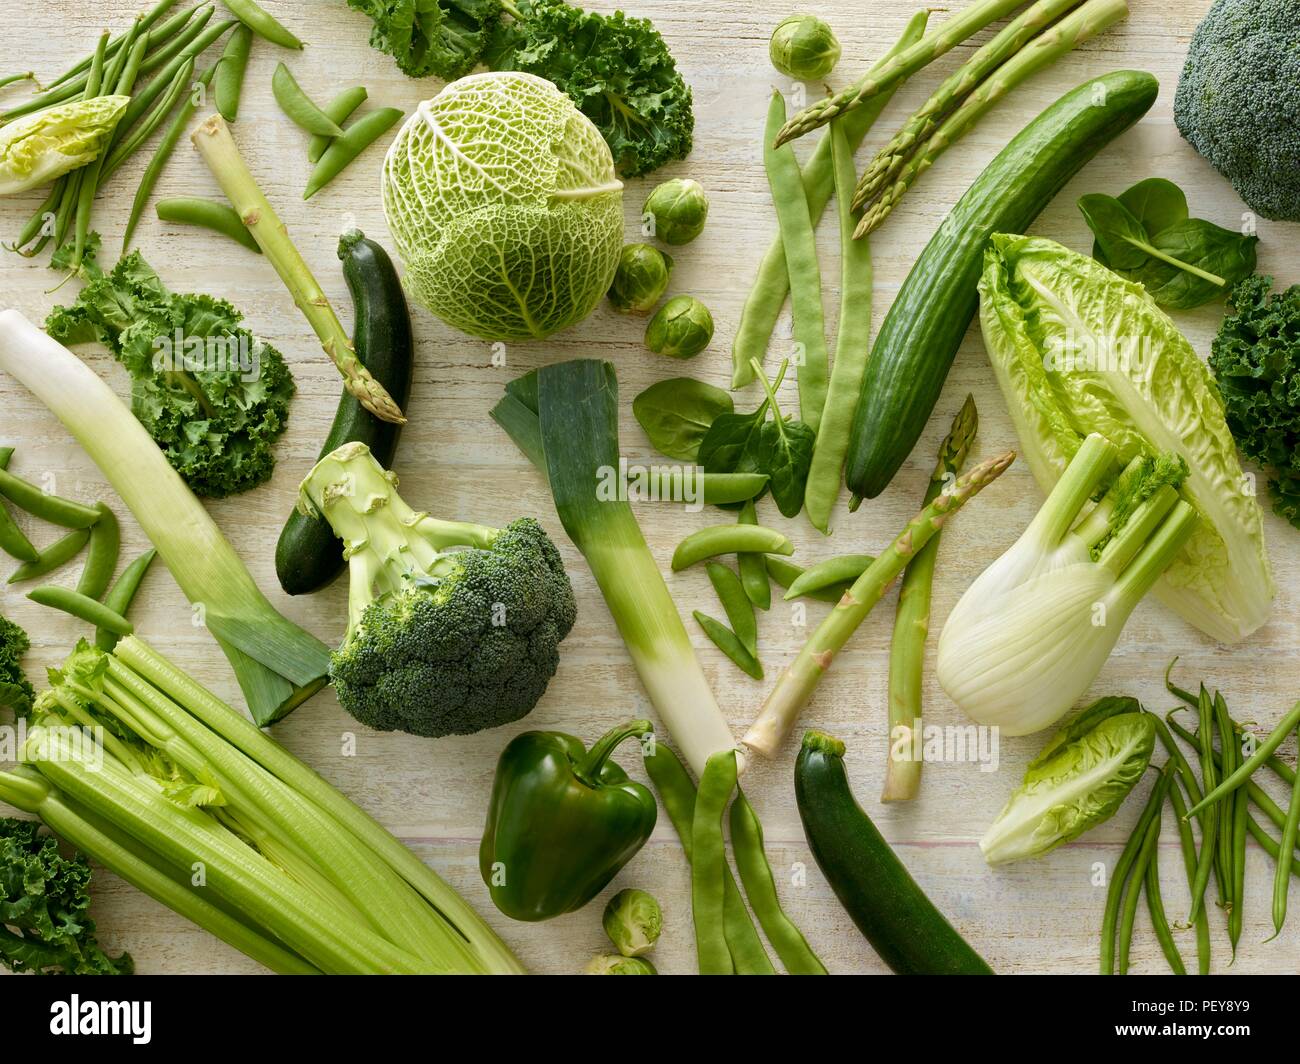 Variety of fresh green vegetables. Stock Photo